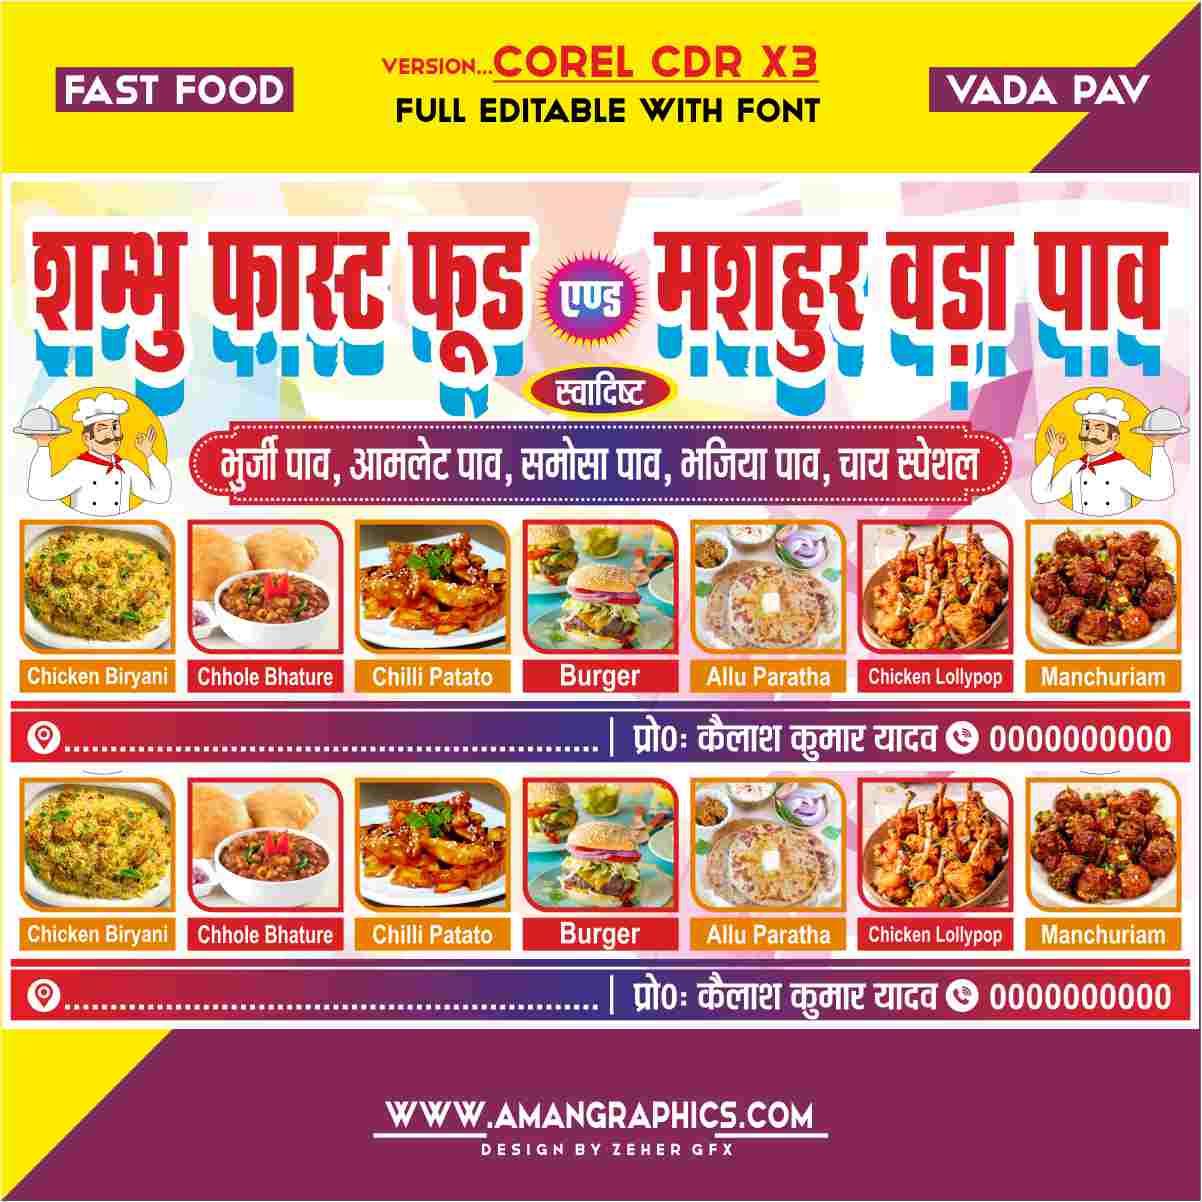 Shambhu Fast Food And Mashhur Vada Pav Banner Design Cdr File